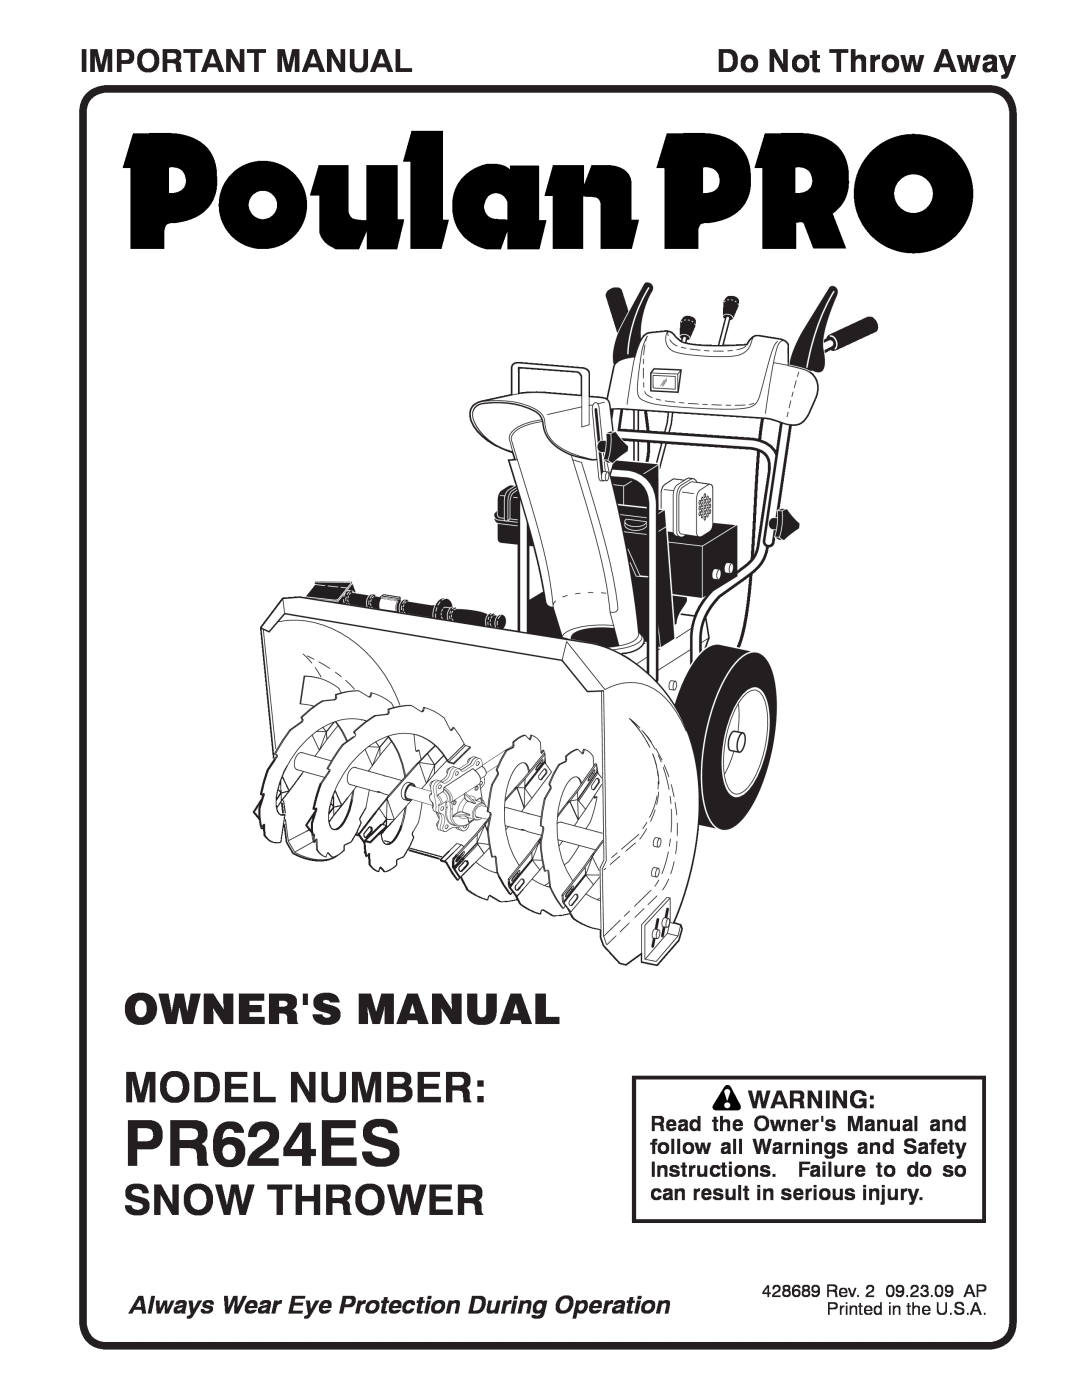 Poulan 96192002901, 428689 owner manual Snow Thrower, Important Manual, PR624ES, Do Not Throw Away 